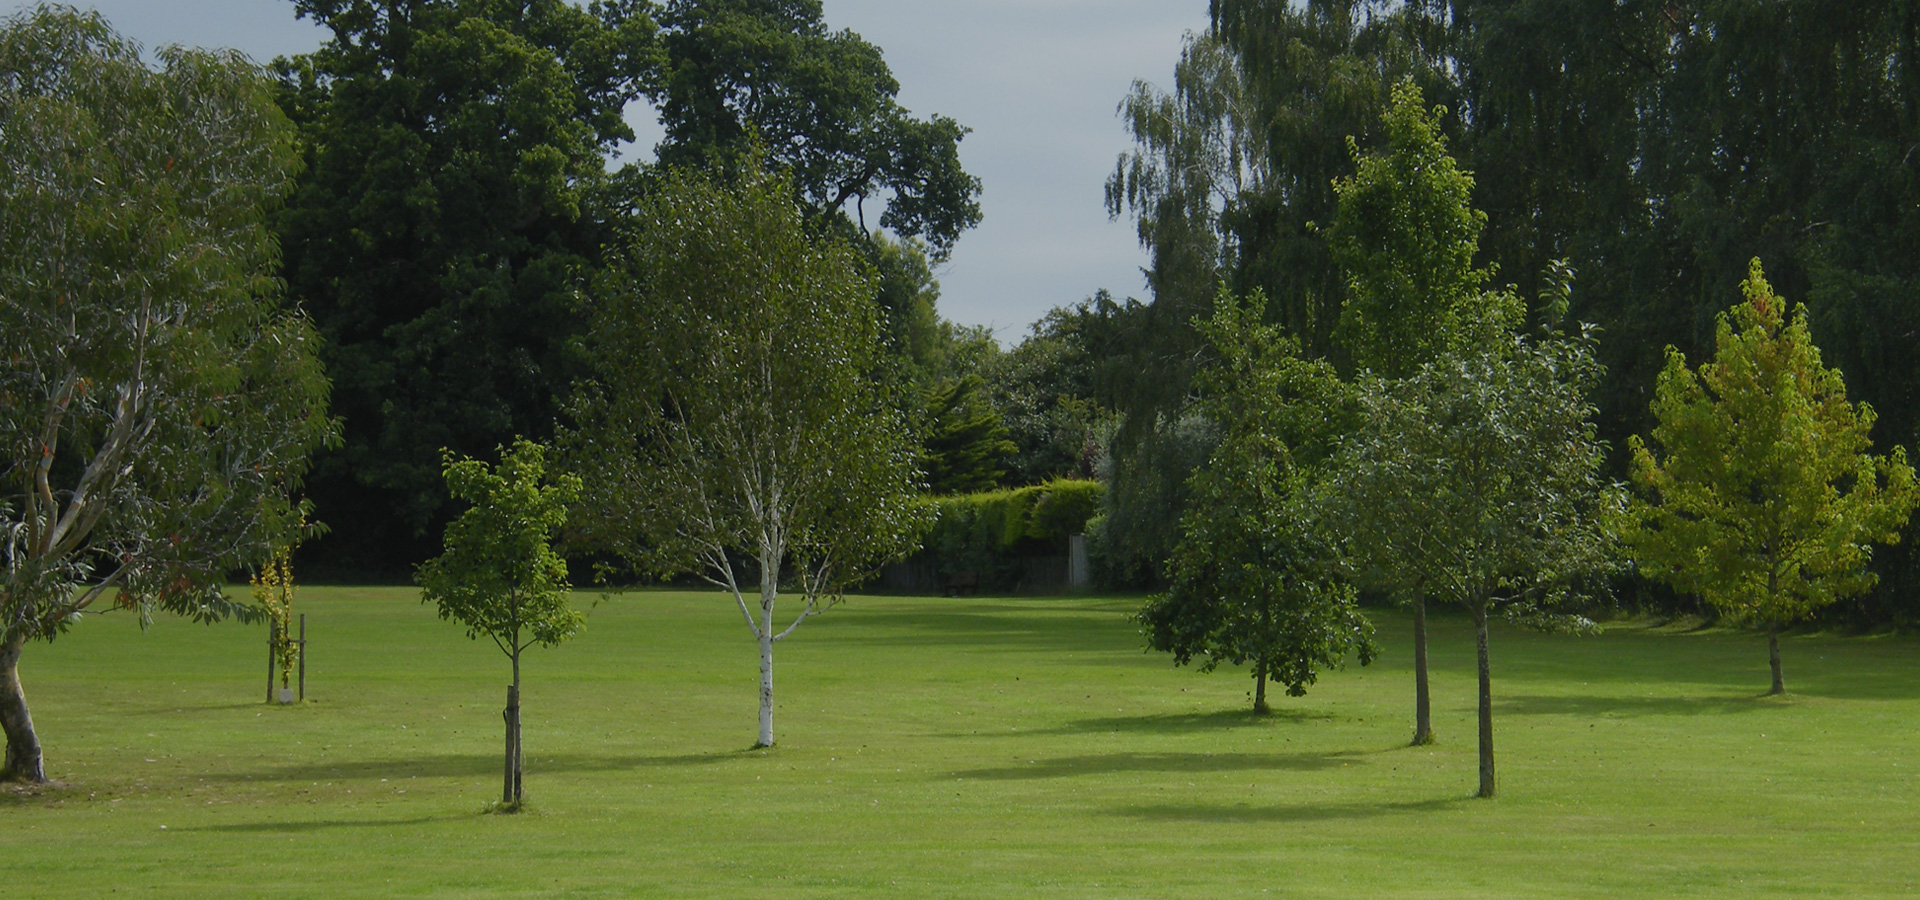 Trees in Finchampstead Memorial Park